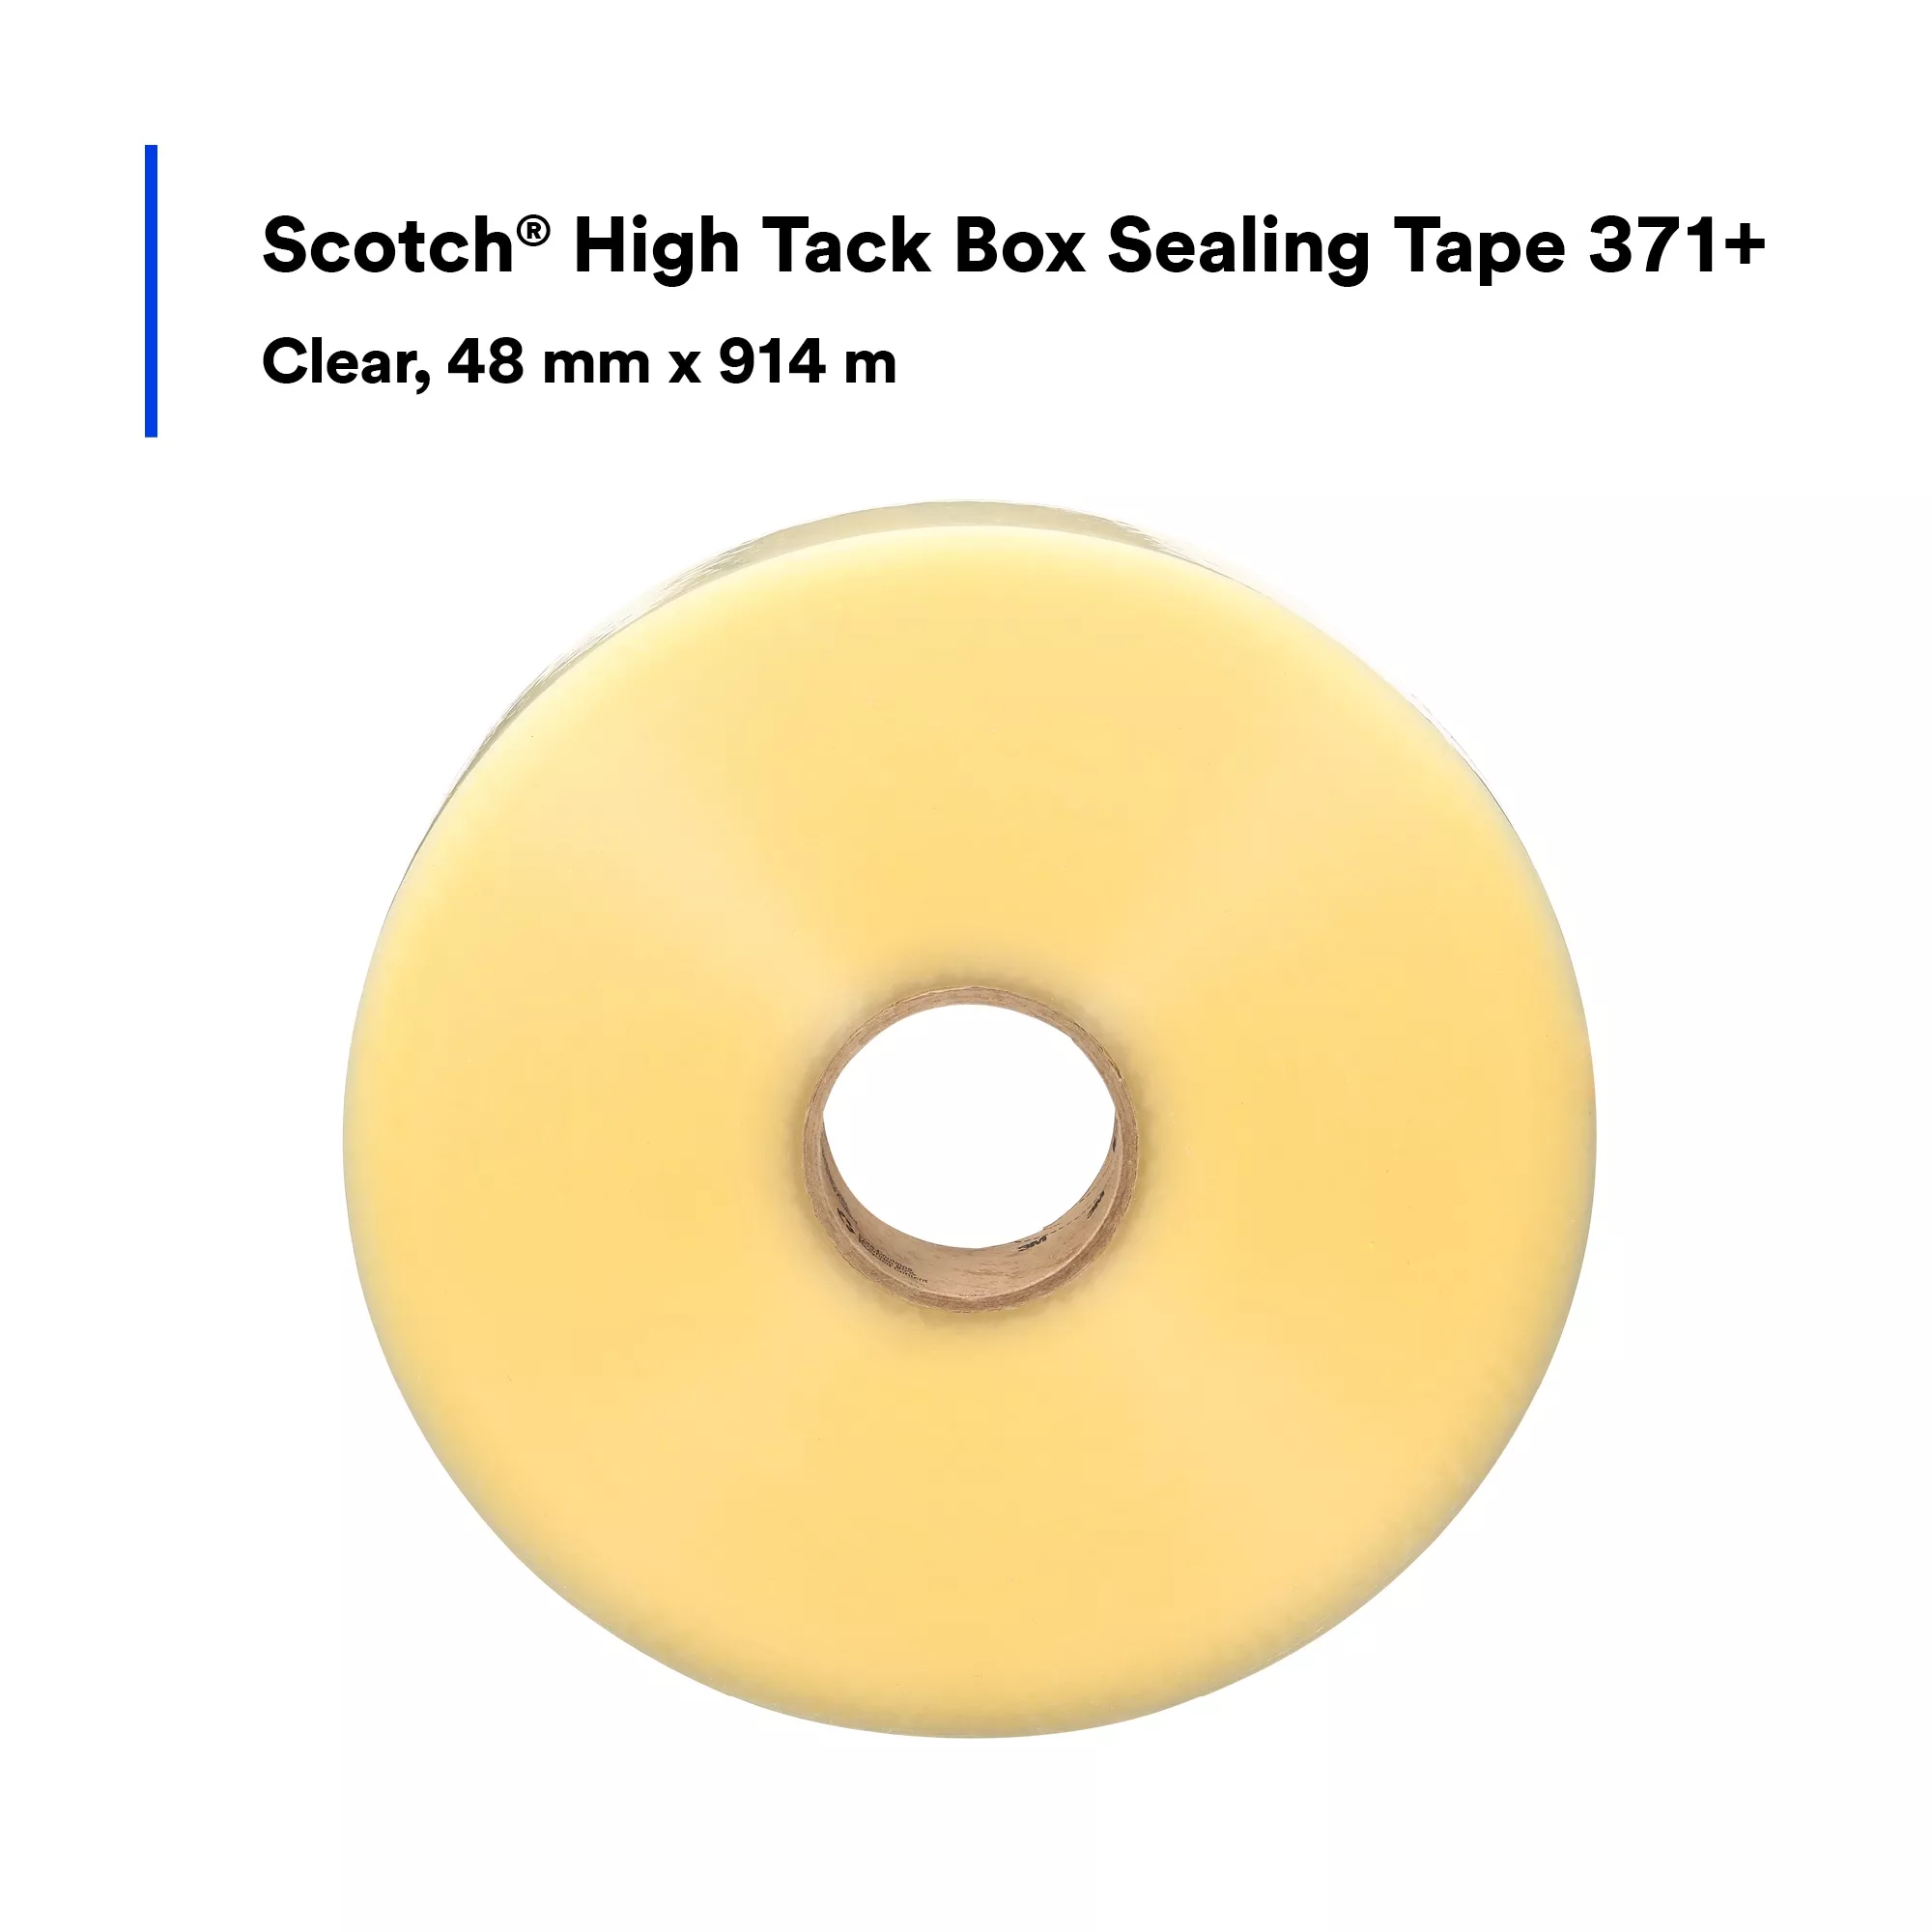 SKU 7100288624 | Scotch® High Tack Box Sealing Tape 371+